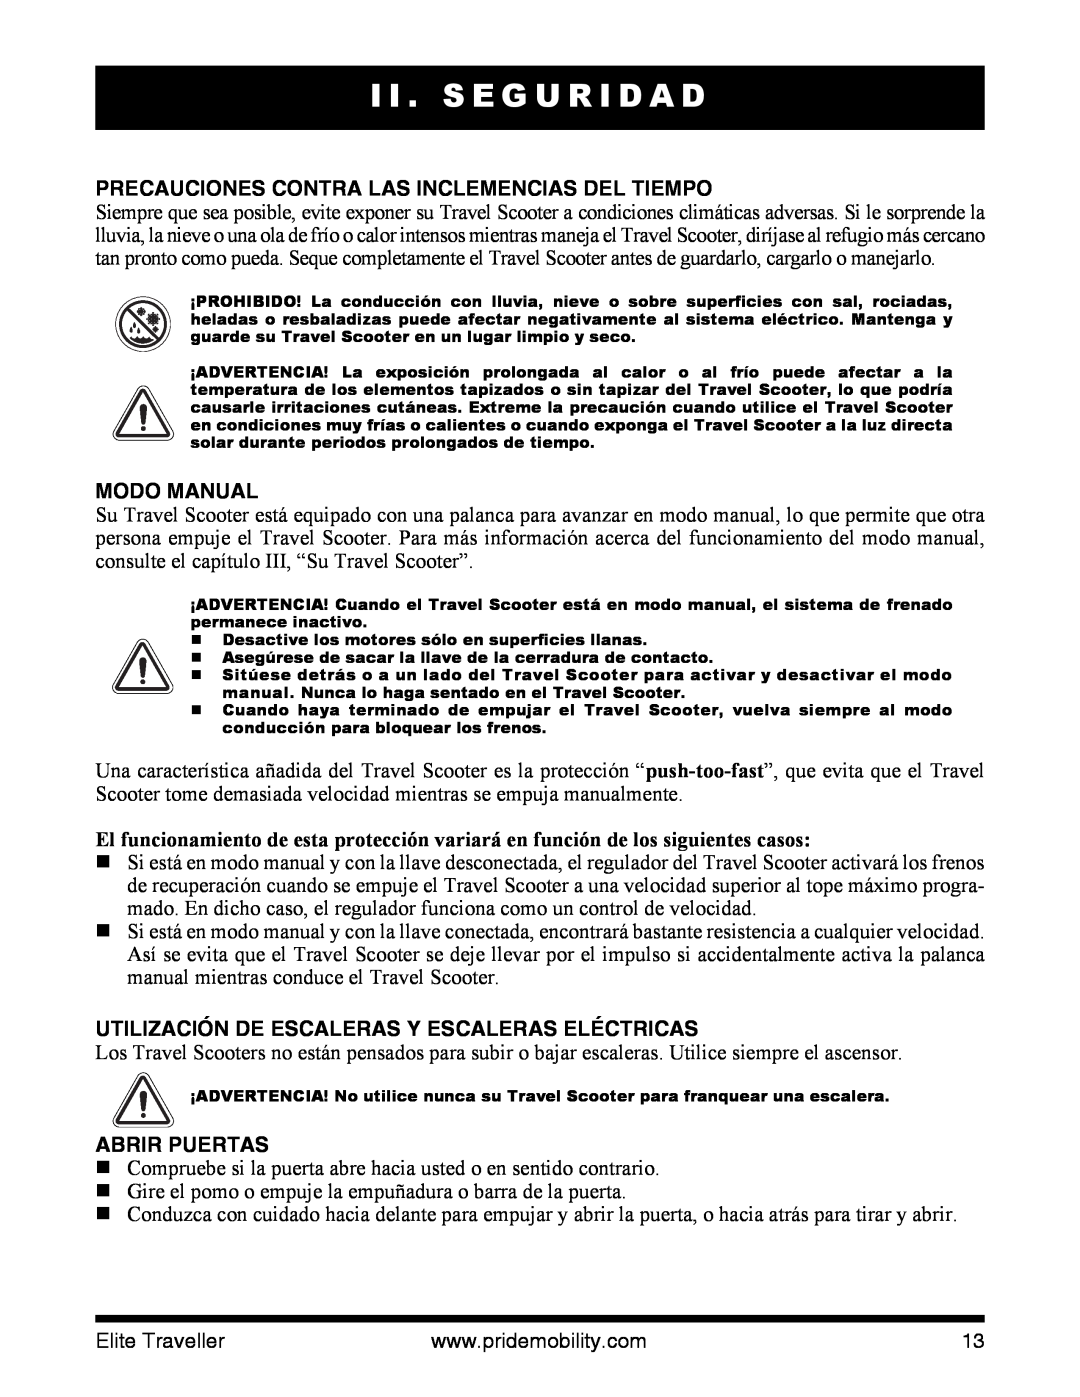 Pride Mobility SC40E Precauciones Contra Las Inclemencias Del Tiempo, Modo Manual, Abrir Puertas, I I . S E G U R I D A D 